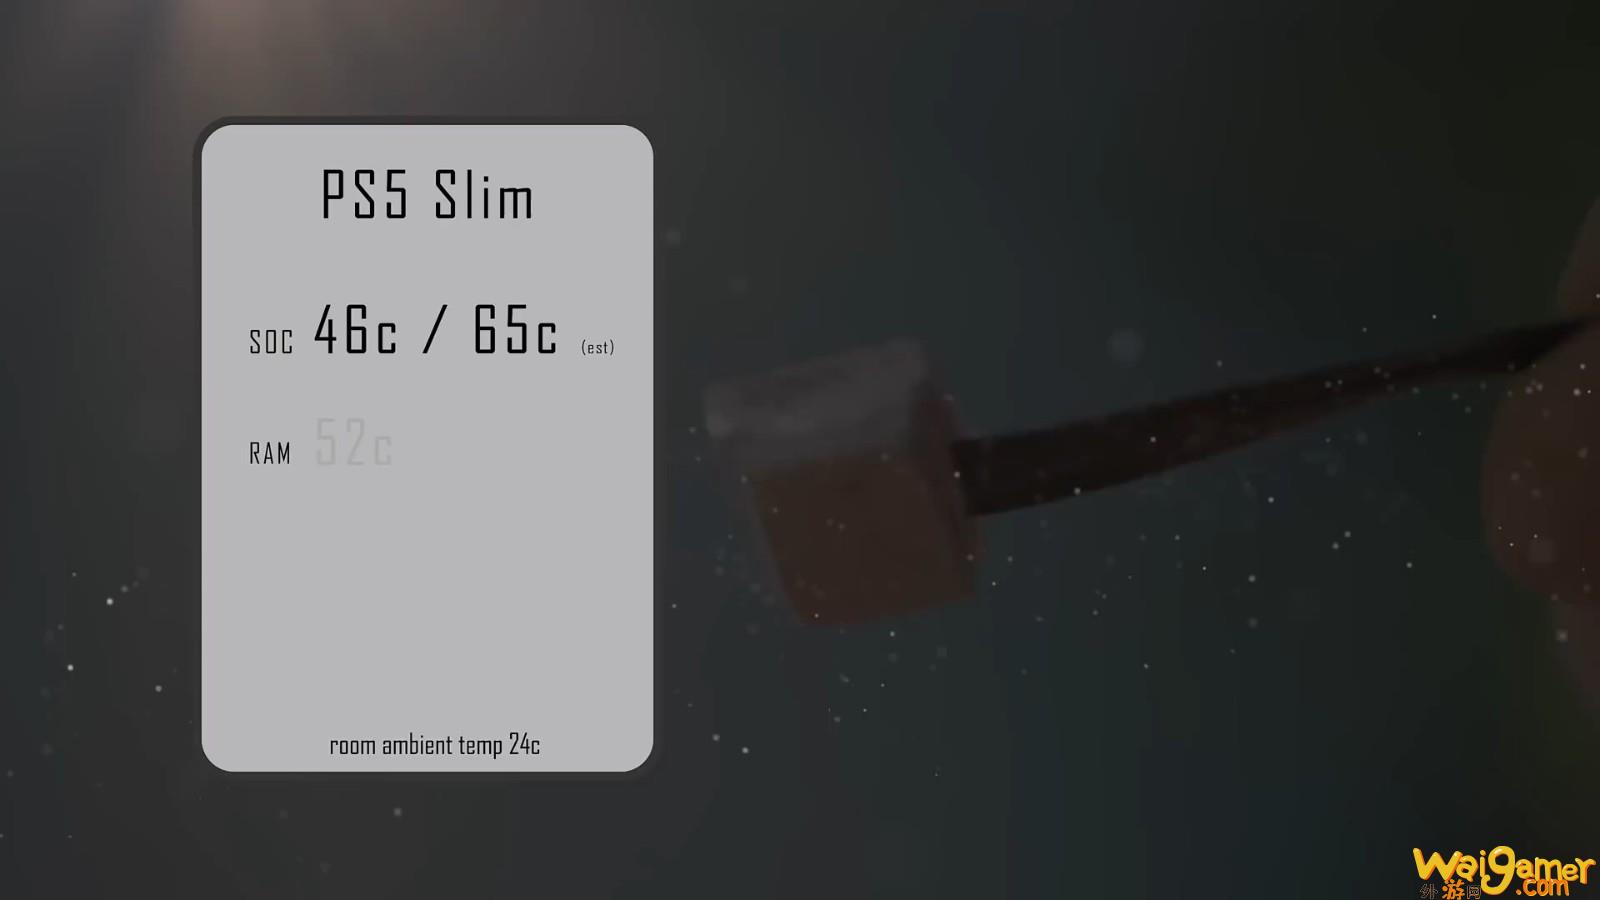 国外YouTuber成功打造PS5 Slim  厚不到2厘米(国外油价)